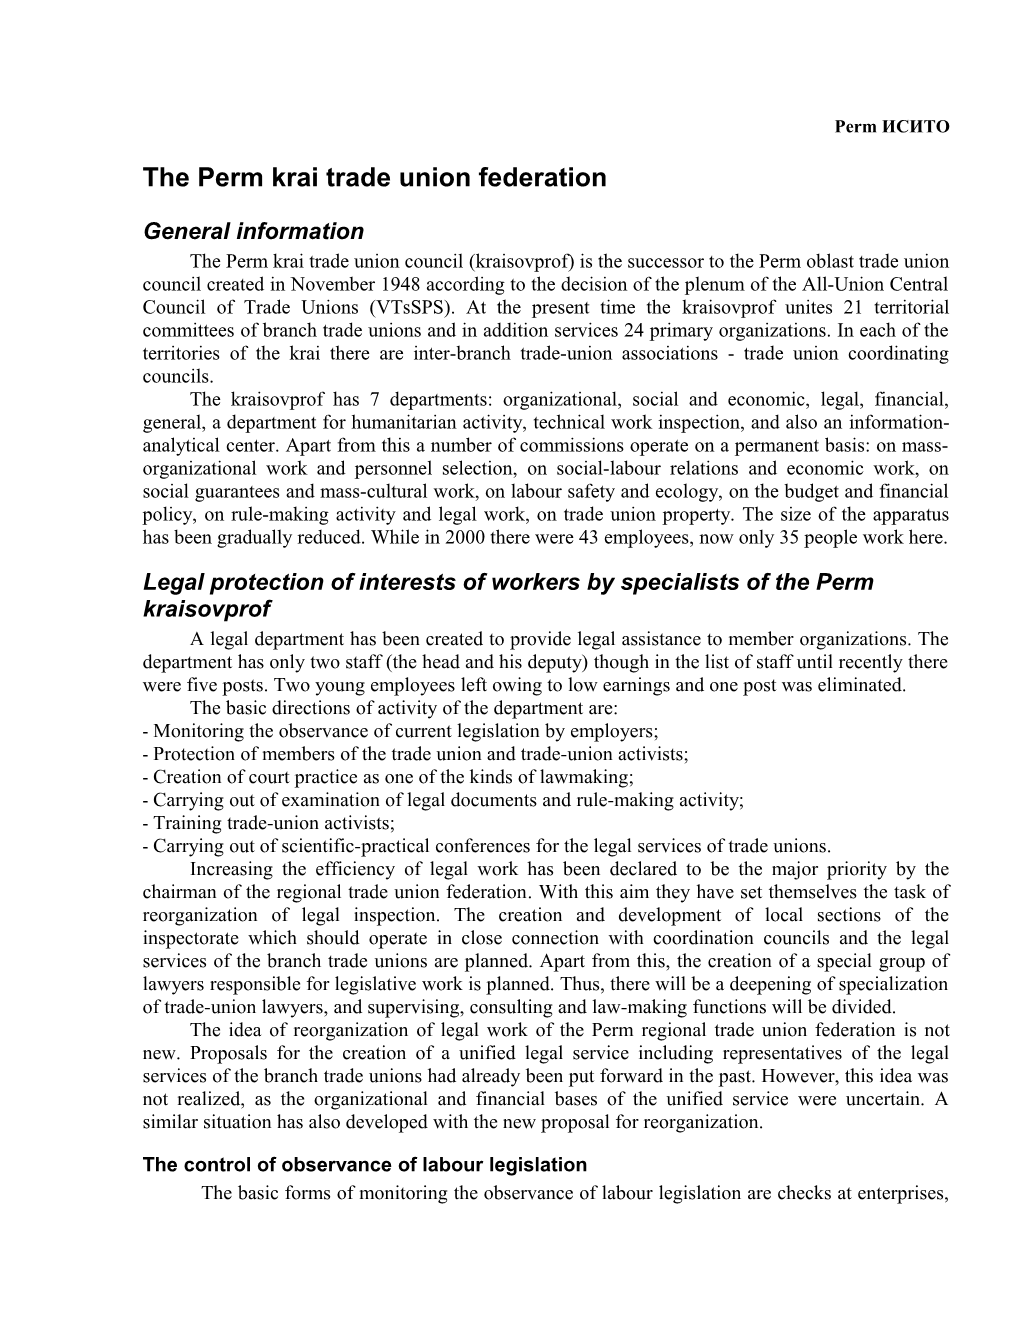 The Perm Krai Trade Union Federation